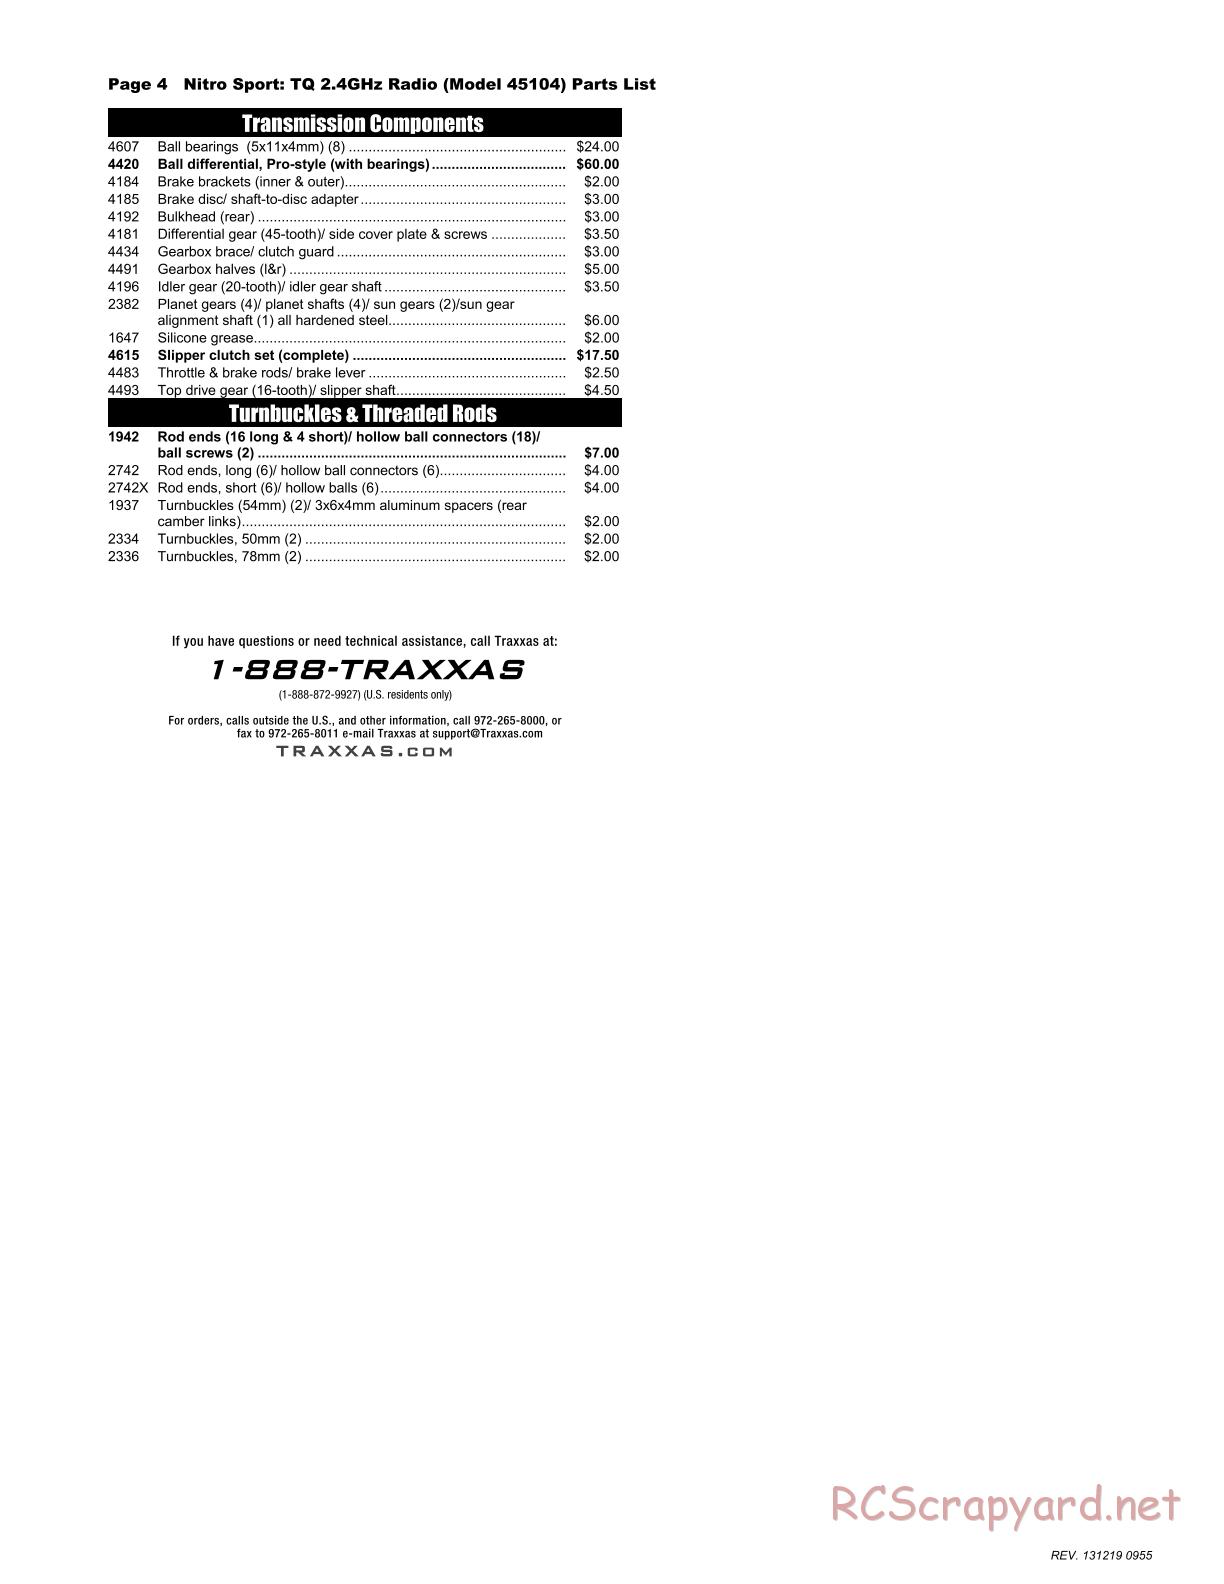 Traxxas - Nitro Sport (2013) - Parts List - Page 4